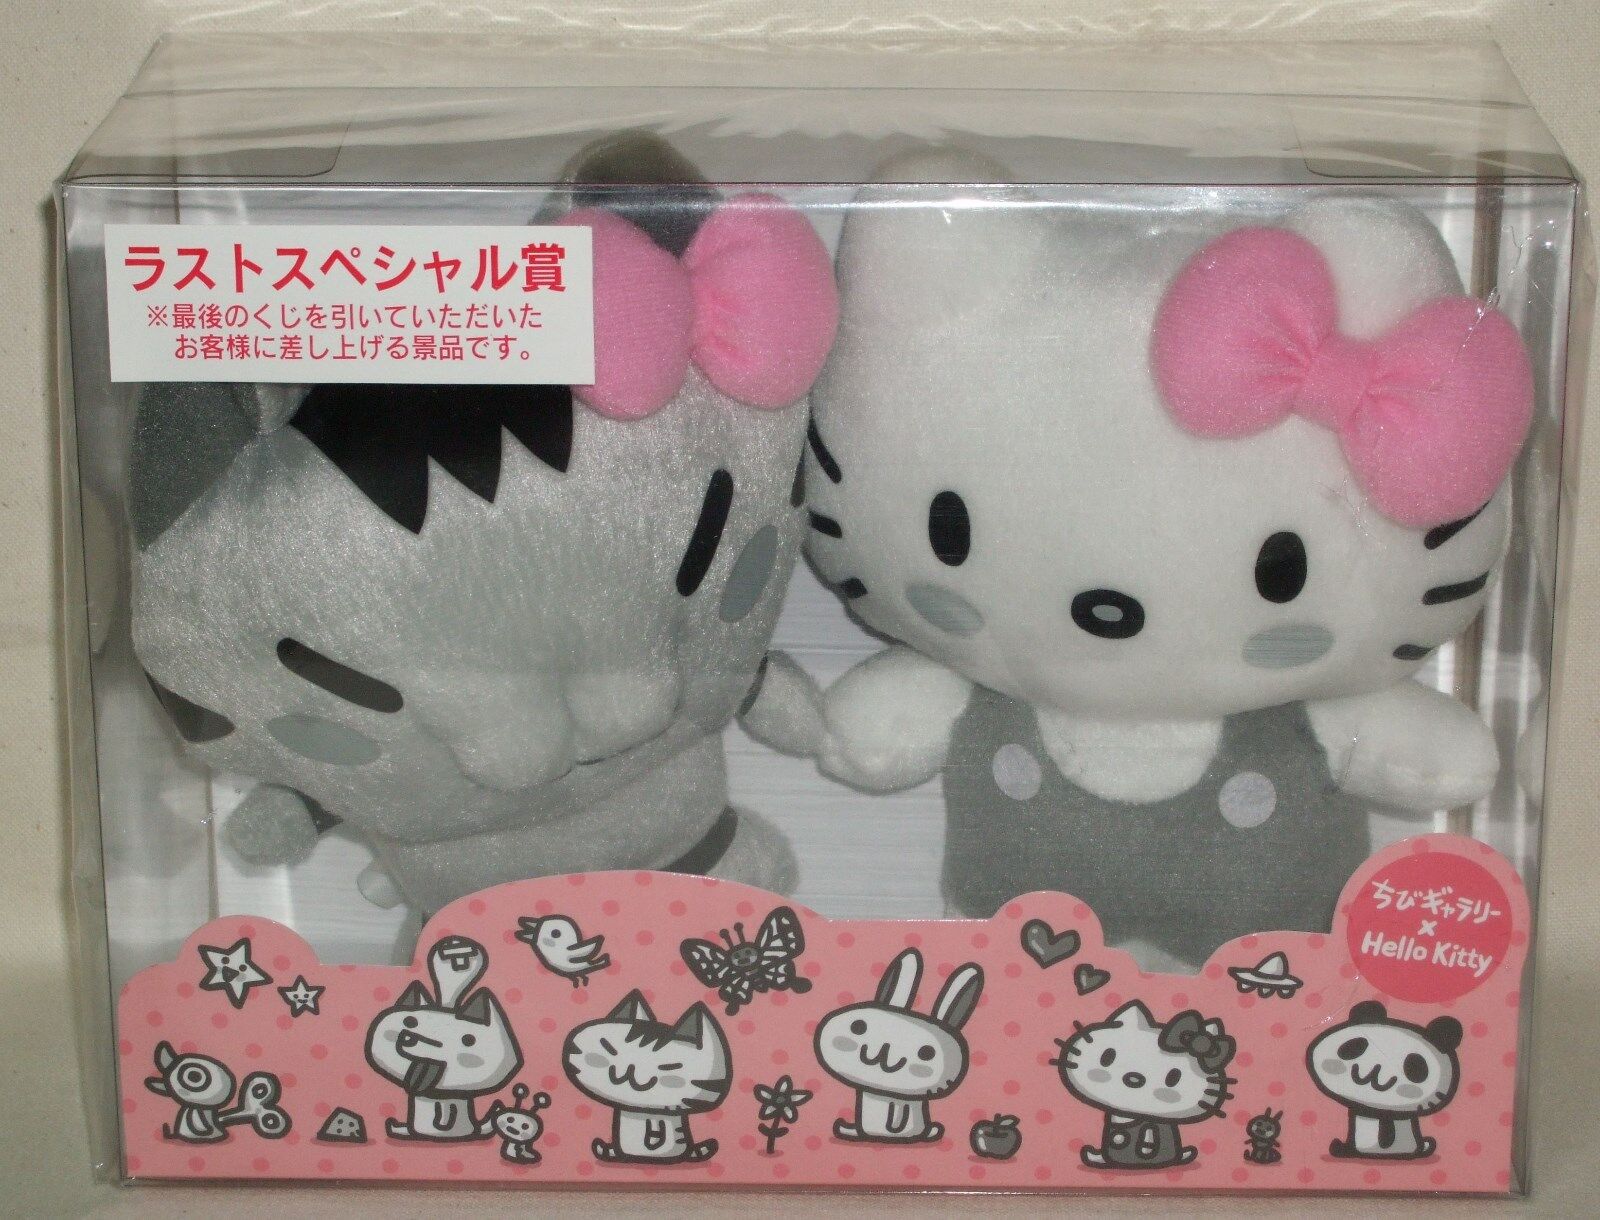 Hello Kitty x Chibi Gallery Shake hands Kuji SP plush doll Sanrio 2015 NIB Rare